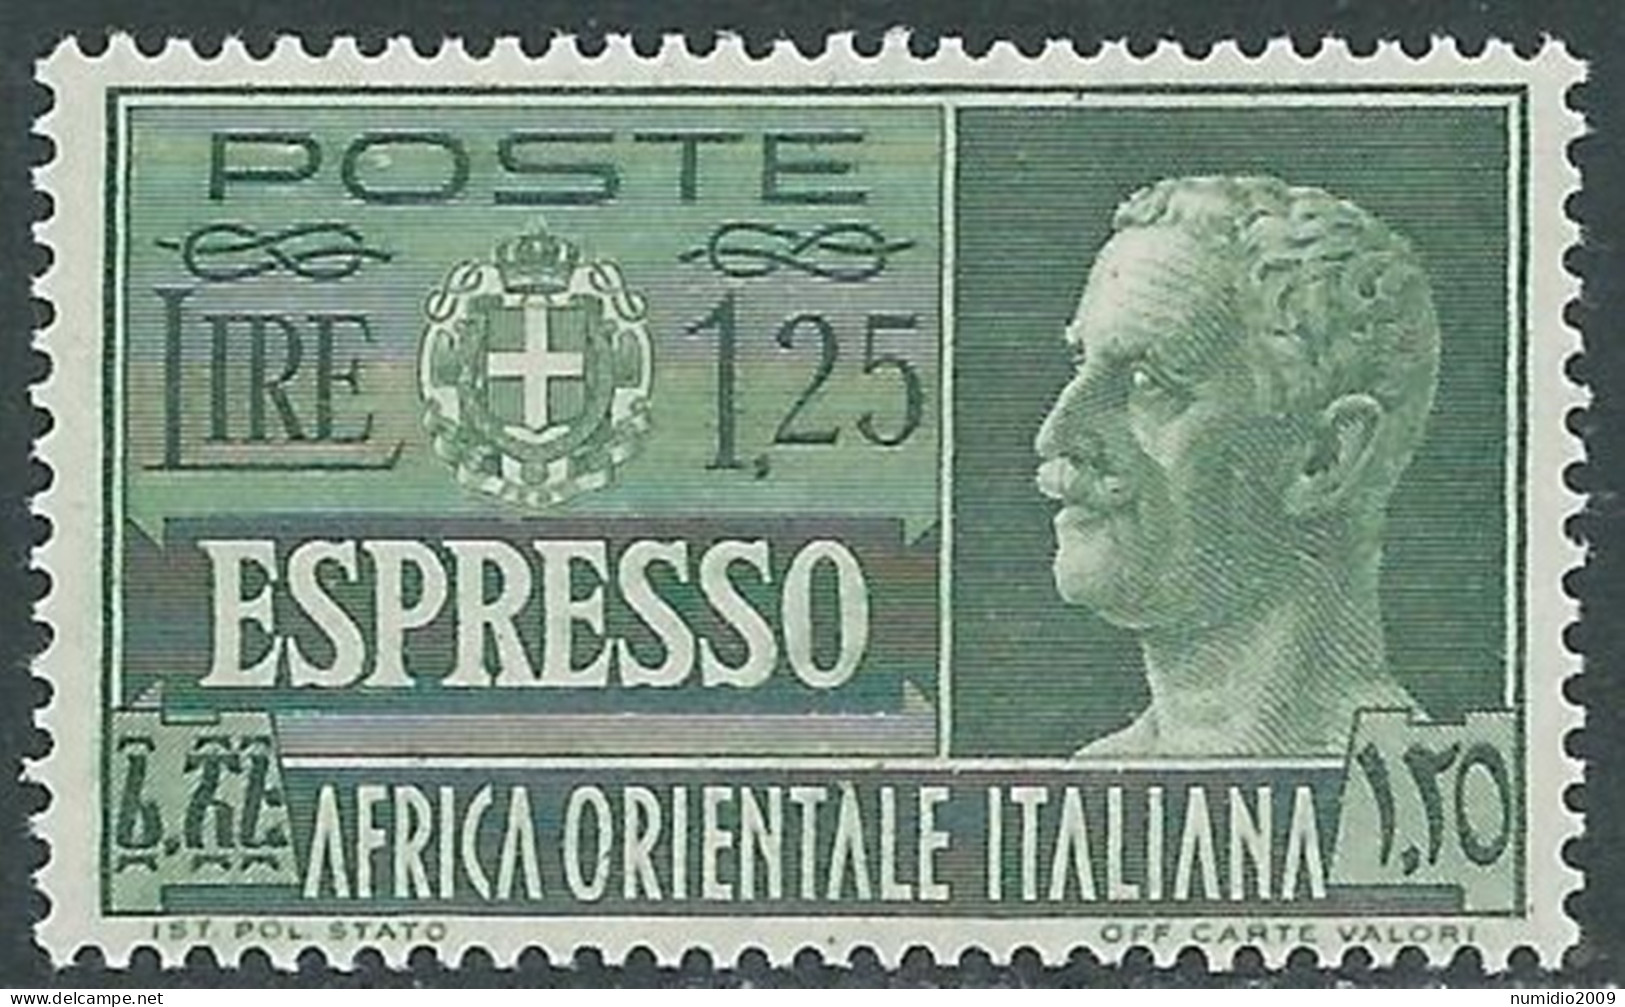 1938 AFRICA ORIENTALE ITALIANA ESPRESSO SOGGETTI VARI 1,25 LIRE MNH ** - I39-10 - Italian Eastern Africa